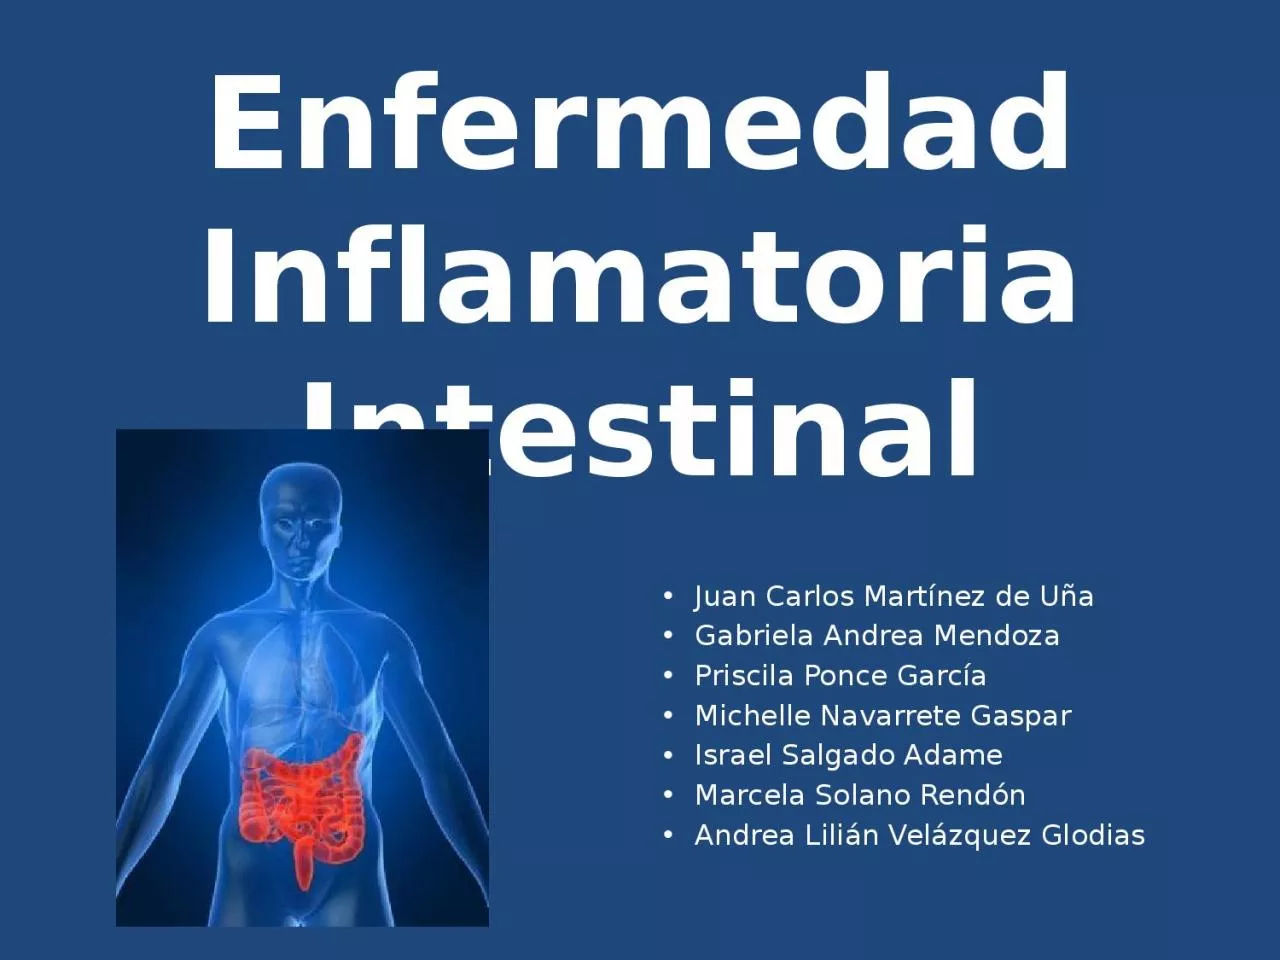 Enfermedad Inflamatoria Intestinal